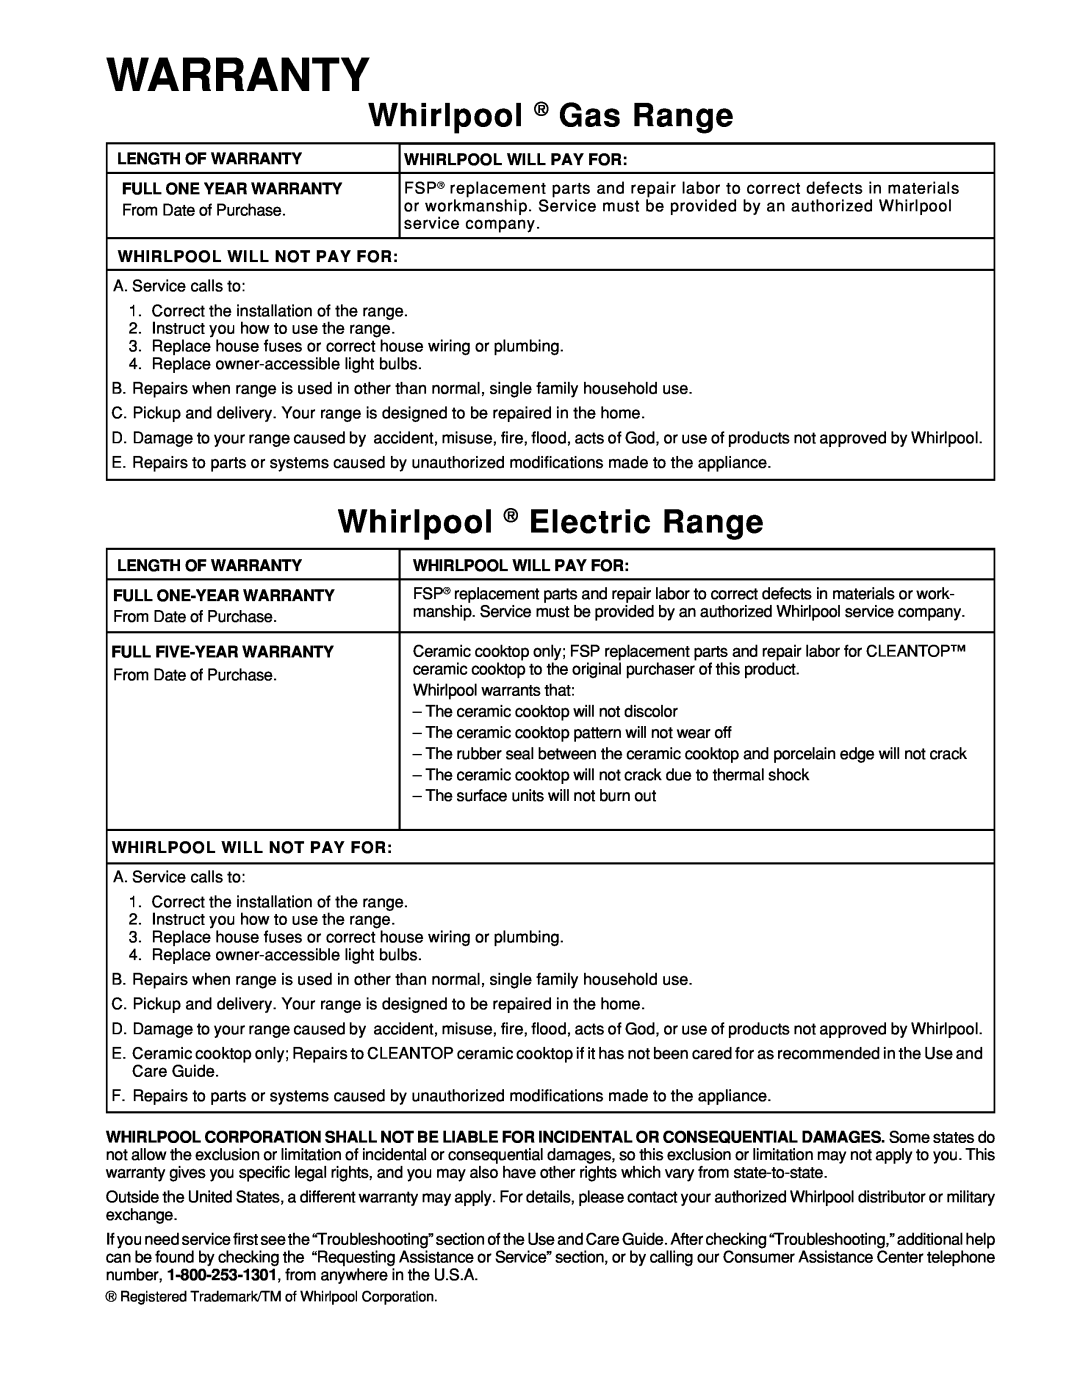 Whirlpool 465 manual Warranty, Whirlpool Gas Range, Whirlpool Electric Range 